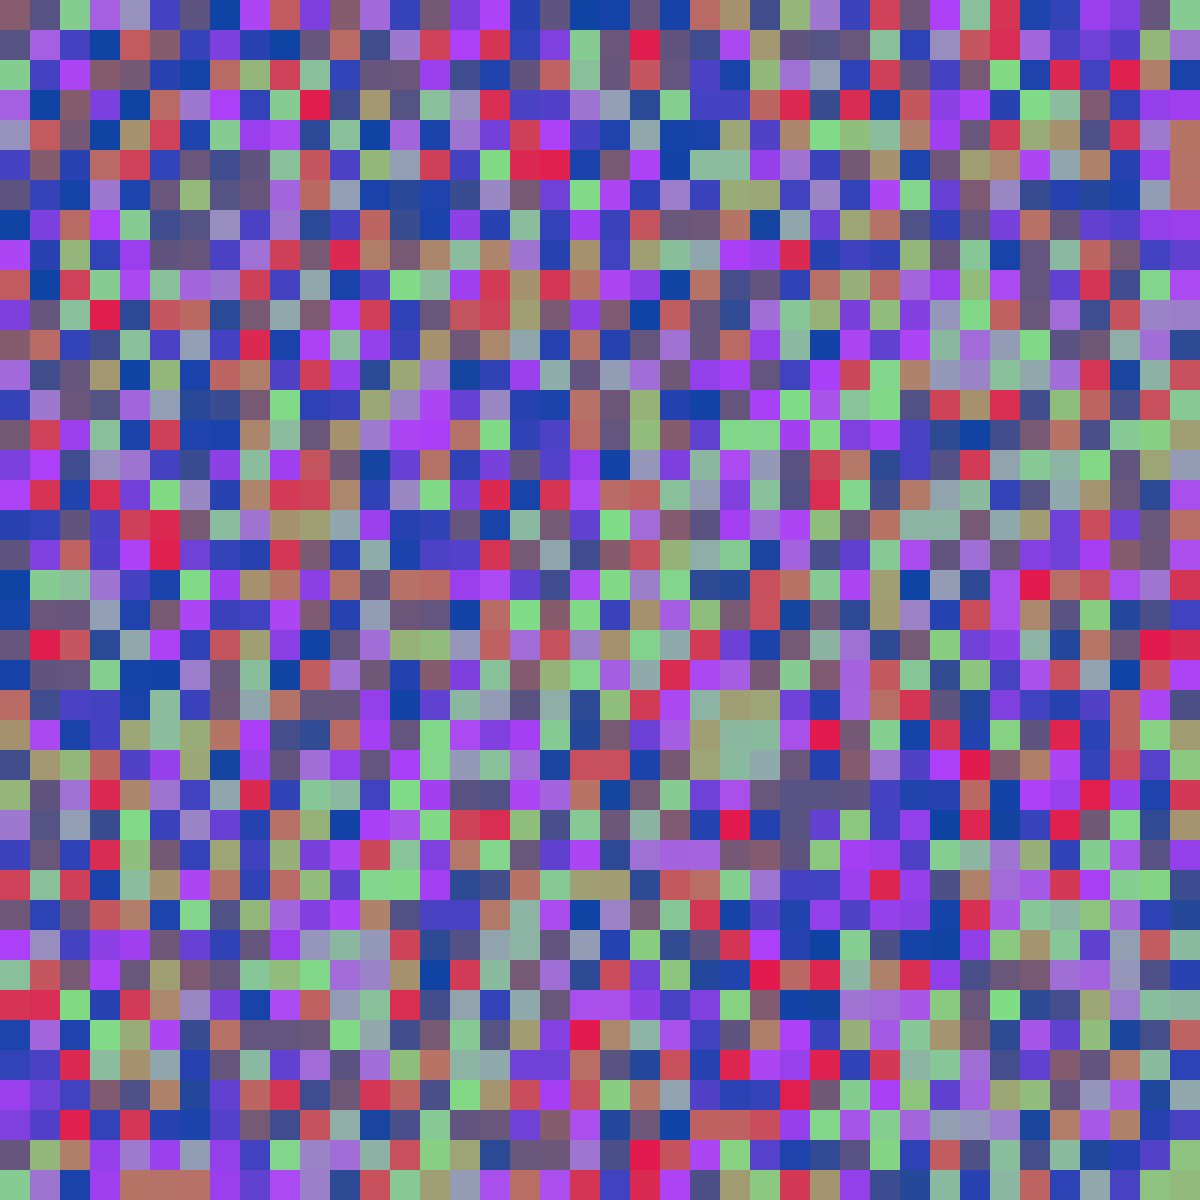 🤖 Beep beep! Check out this colorful pixel art.

🎨 Colors used: #875c6d, #0e43a4, #ae3ff8, #80dd85, #e4174c

#twitterbot #pixelmuse #pixelart #digitalart #8bit #art #generativeart